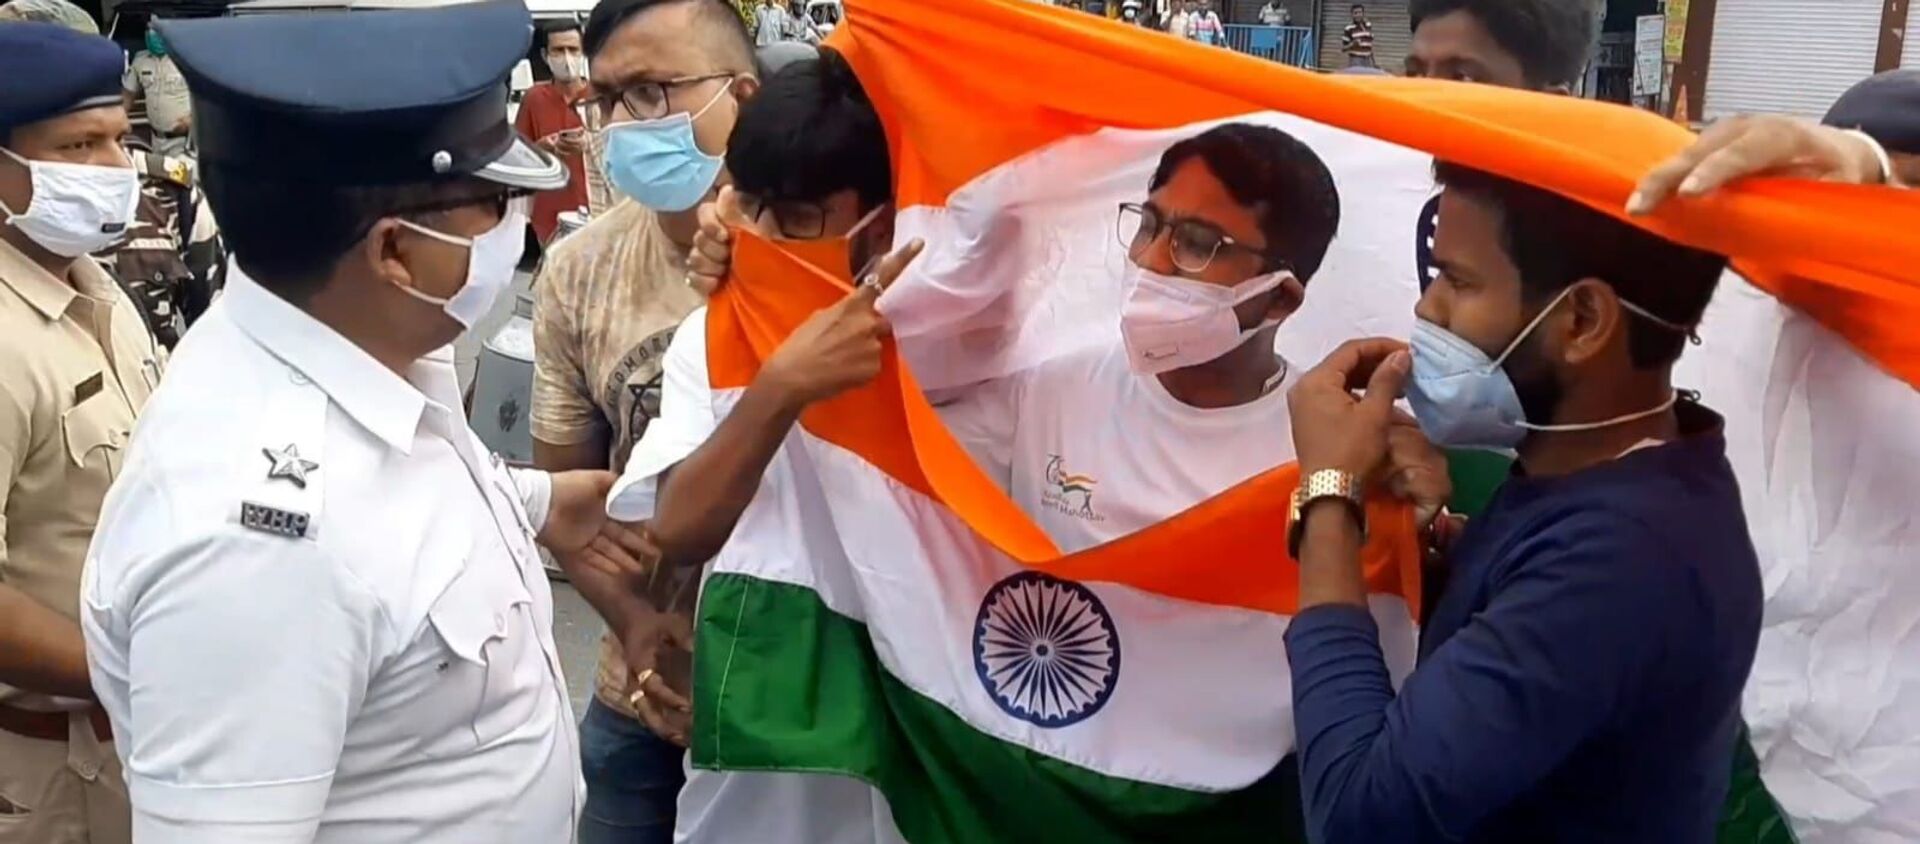 TMC Police has arrested our Siliguri MLA and other Yuva Morcha karyakartas while they were carrying the National Flag celebrating the 75th Independence Year - 'Azadi ka Amrit Mahotsav' - Sputnik International, 1920, 17.08.2021